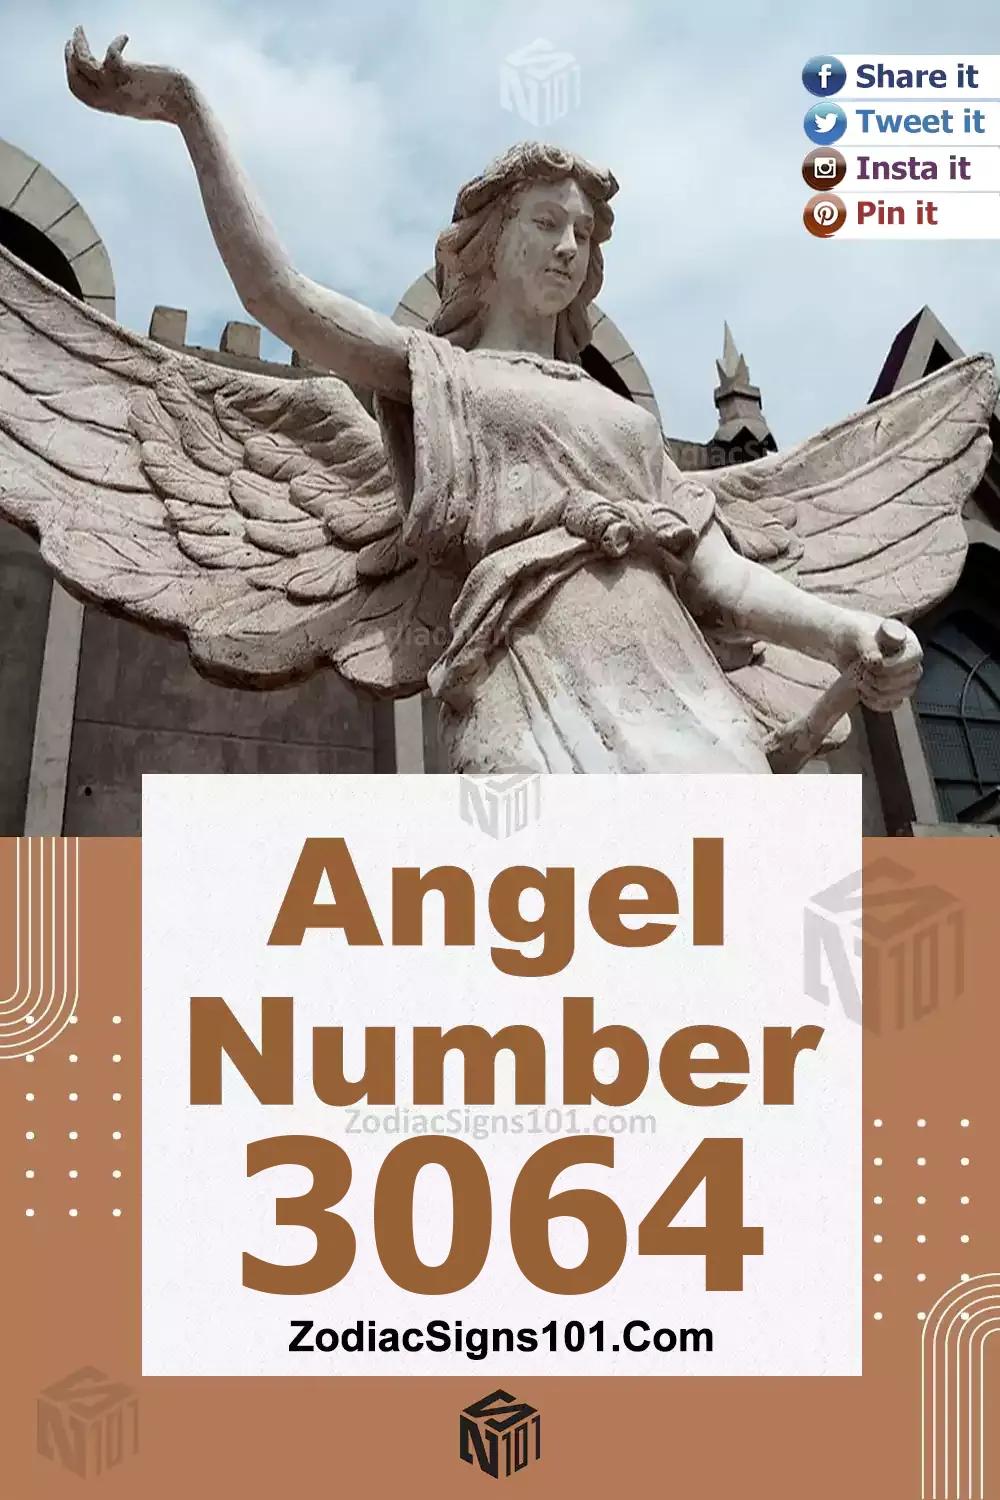 3064-Angel-Number-Meaning.jpg